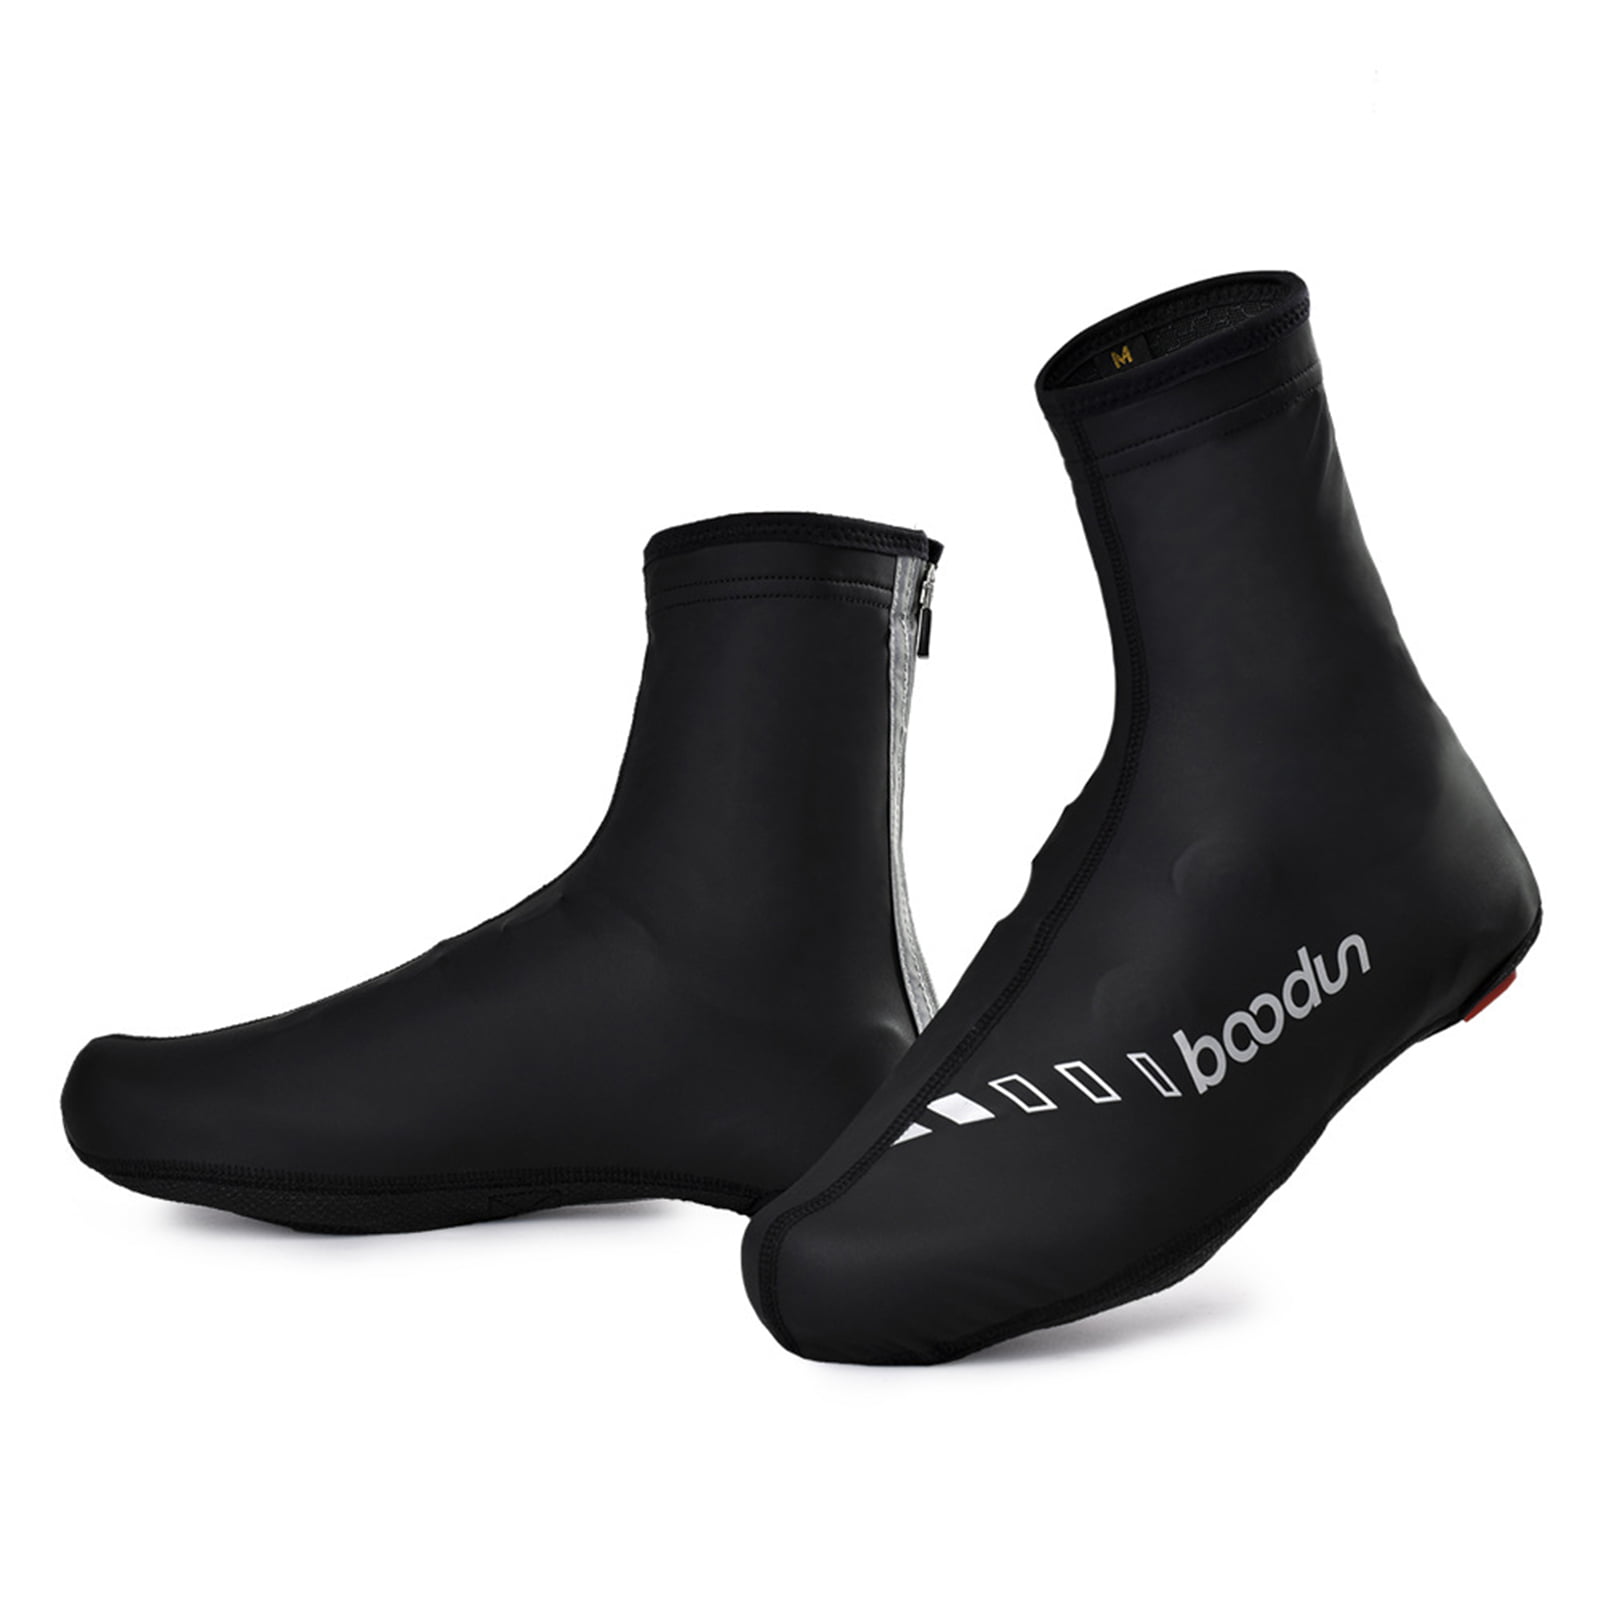 Bike Cycling Shoe Covers Warm Cover Rain Waterproof Protector Overshoes Sport 